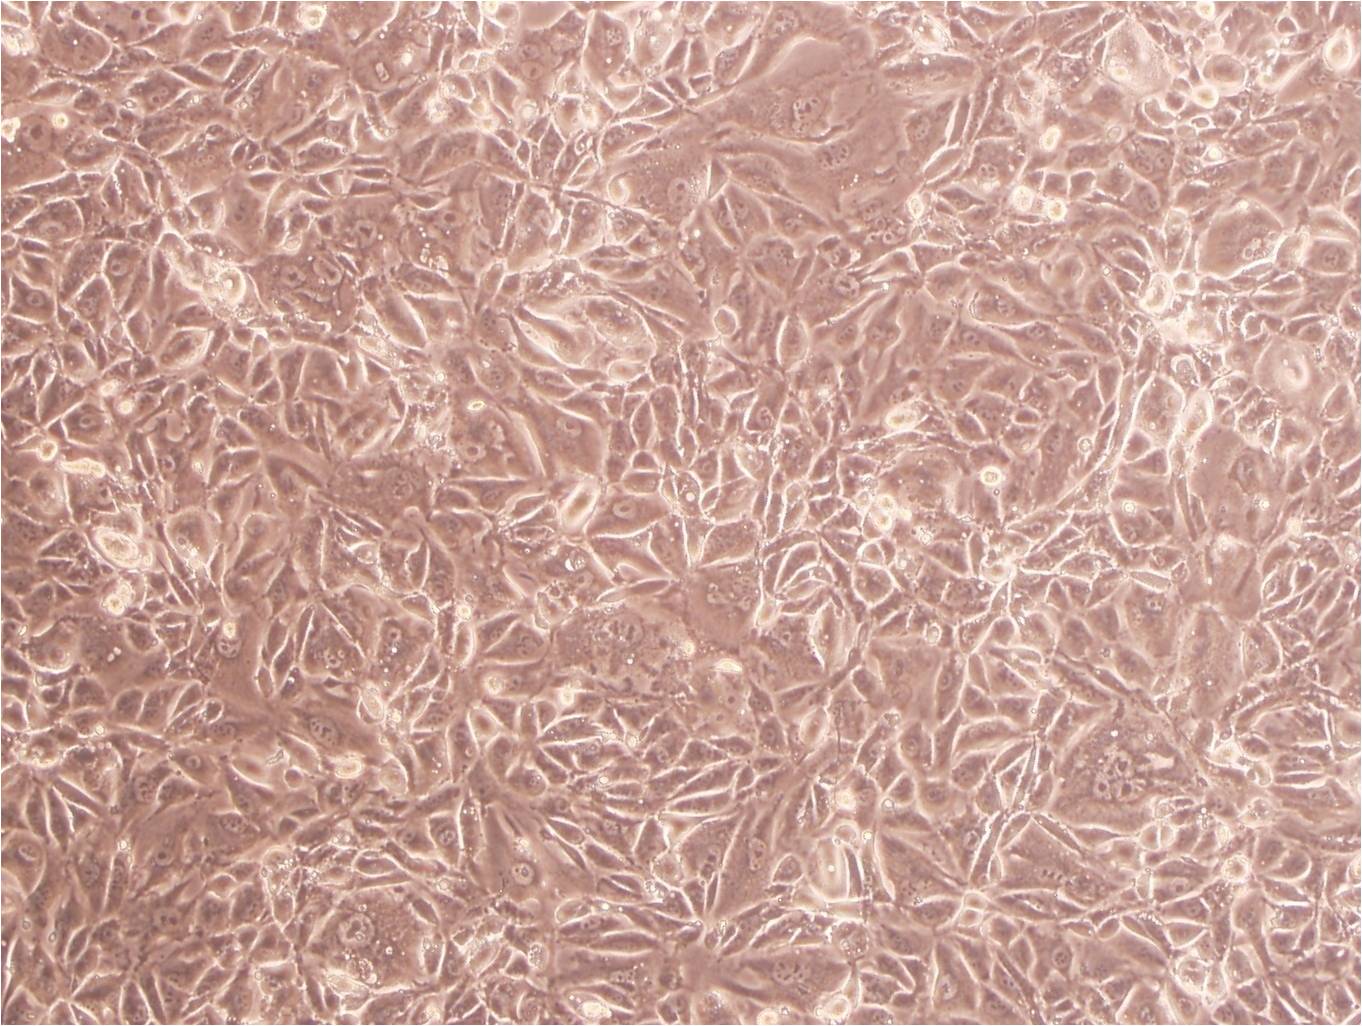 QGY-7703 Cells|人肝癌细胞系,QGY-7703 Cells